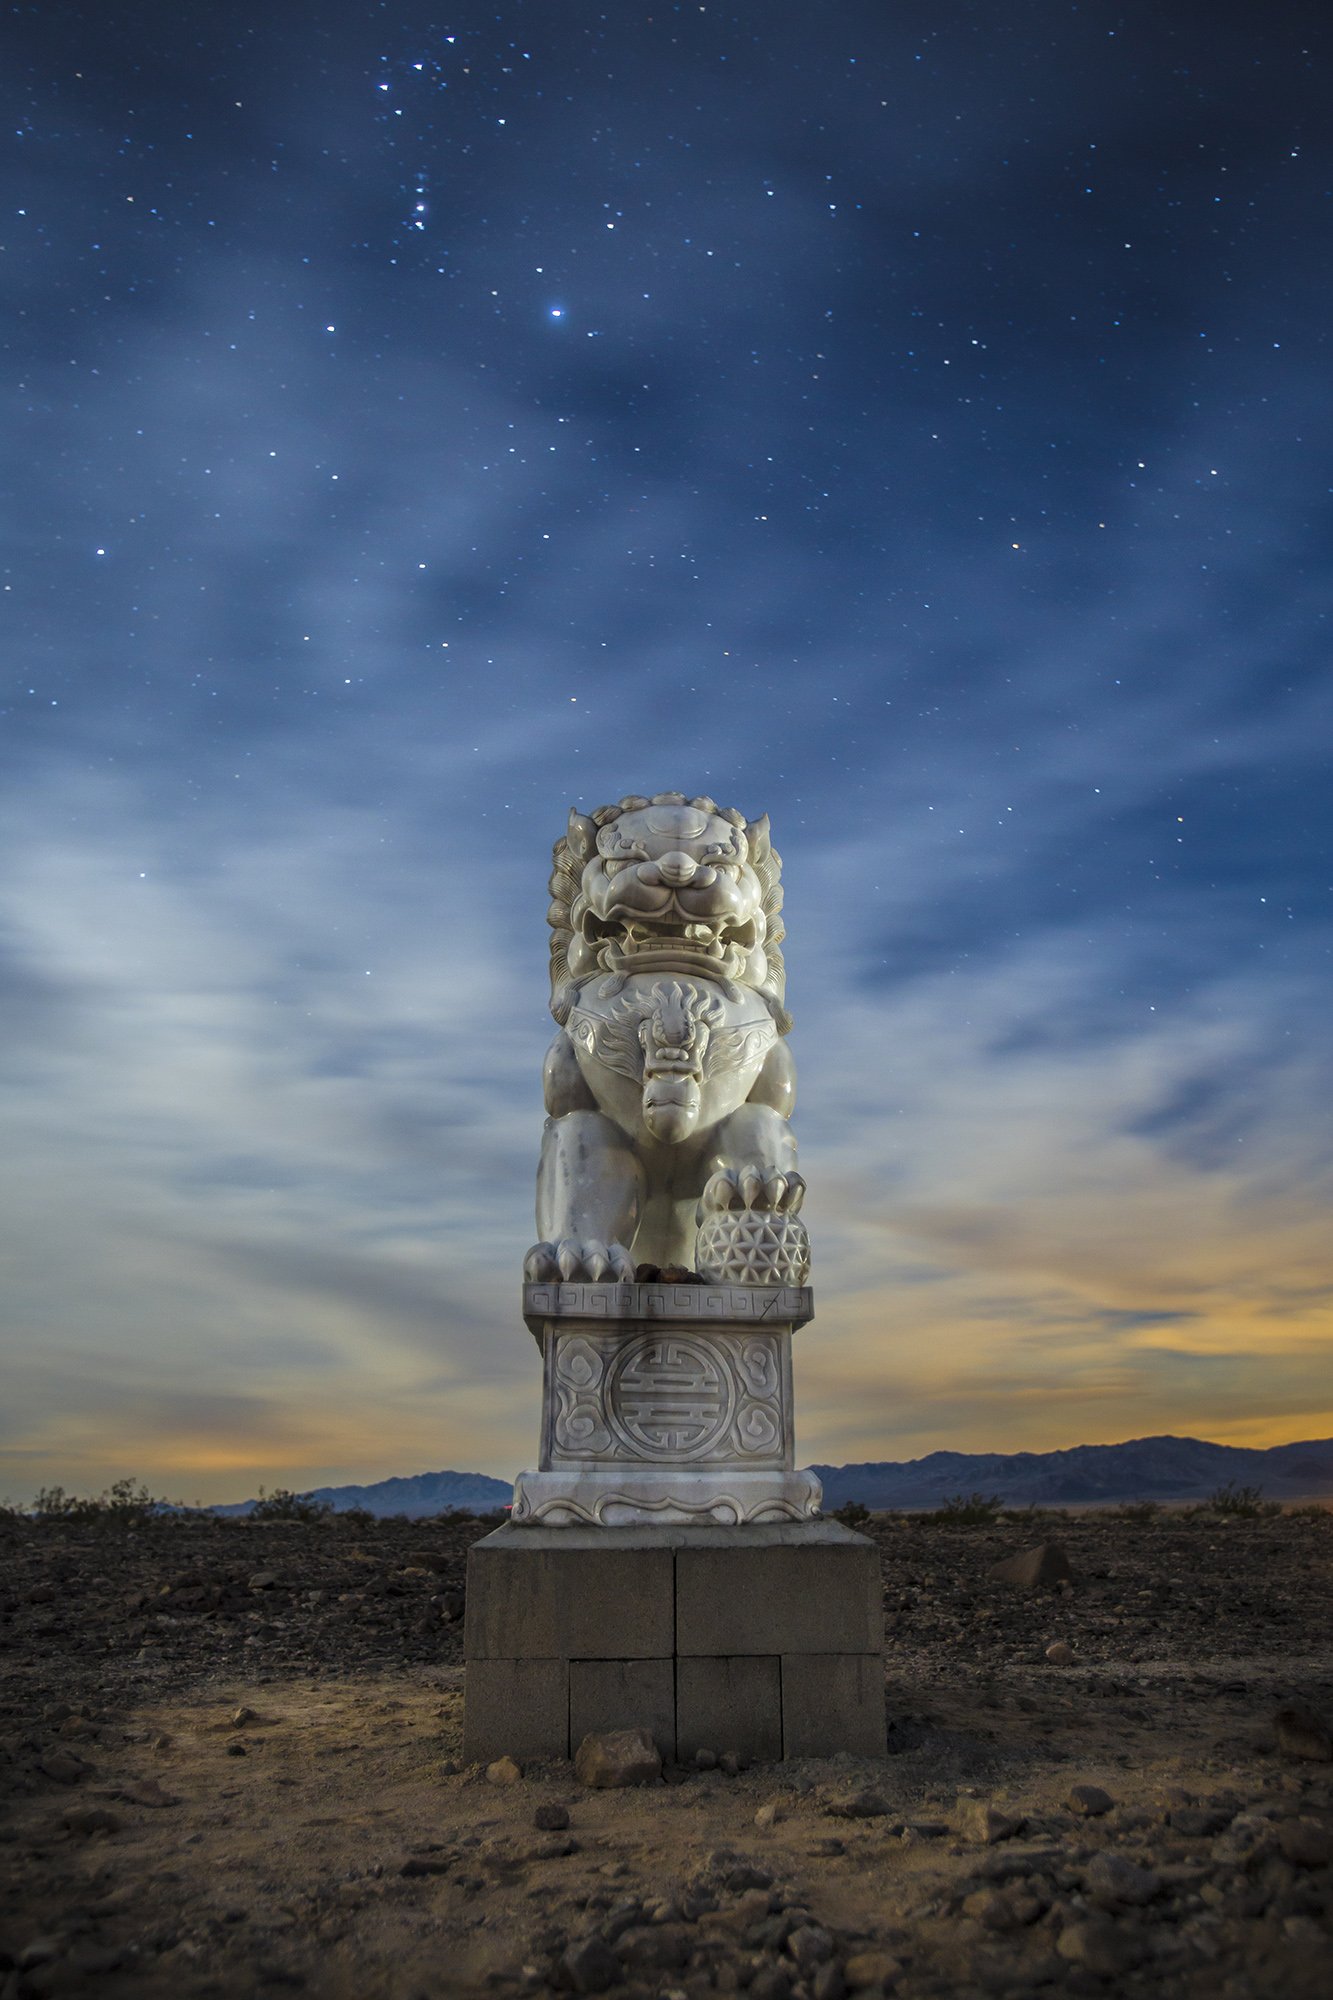  Mojave Lion #1. 7.33 pm. February 15, 2014 